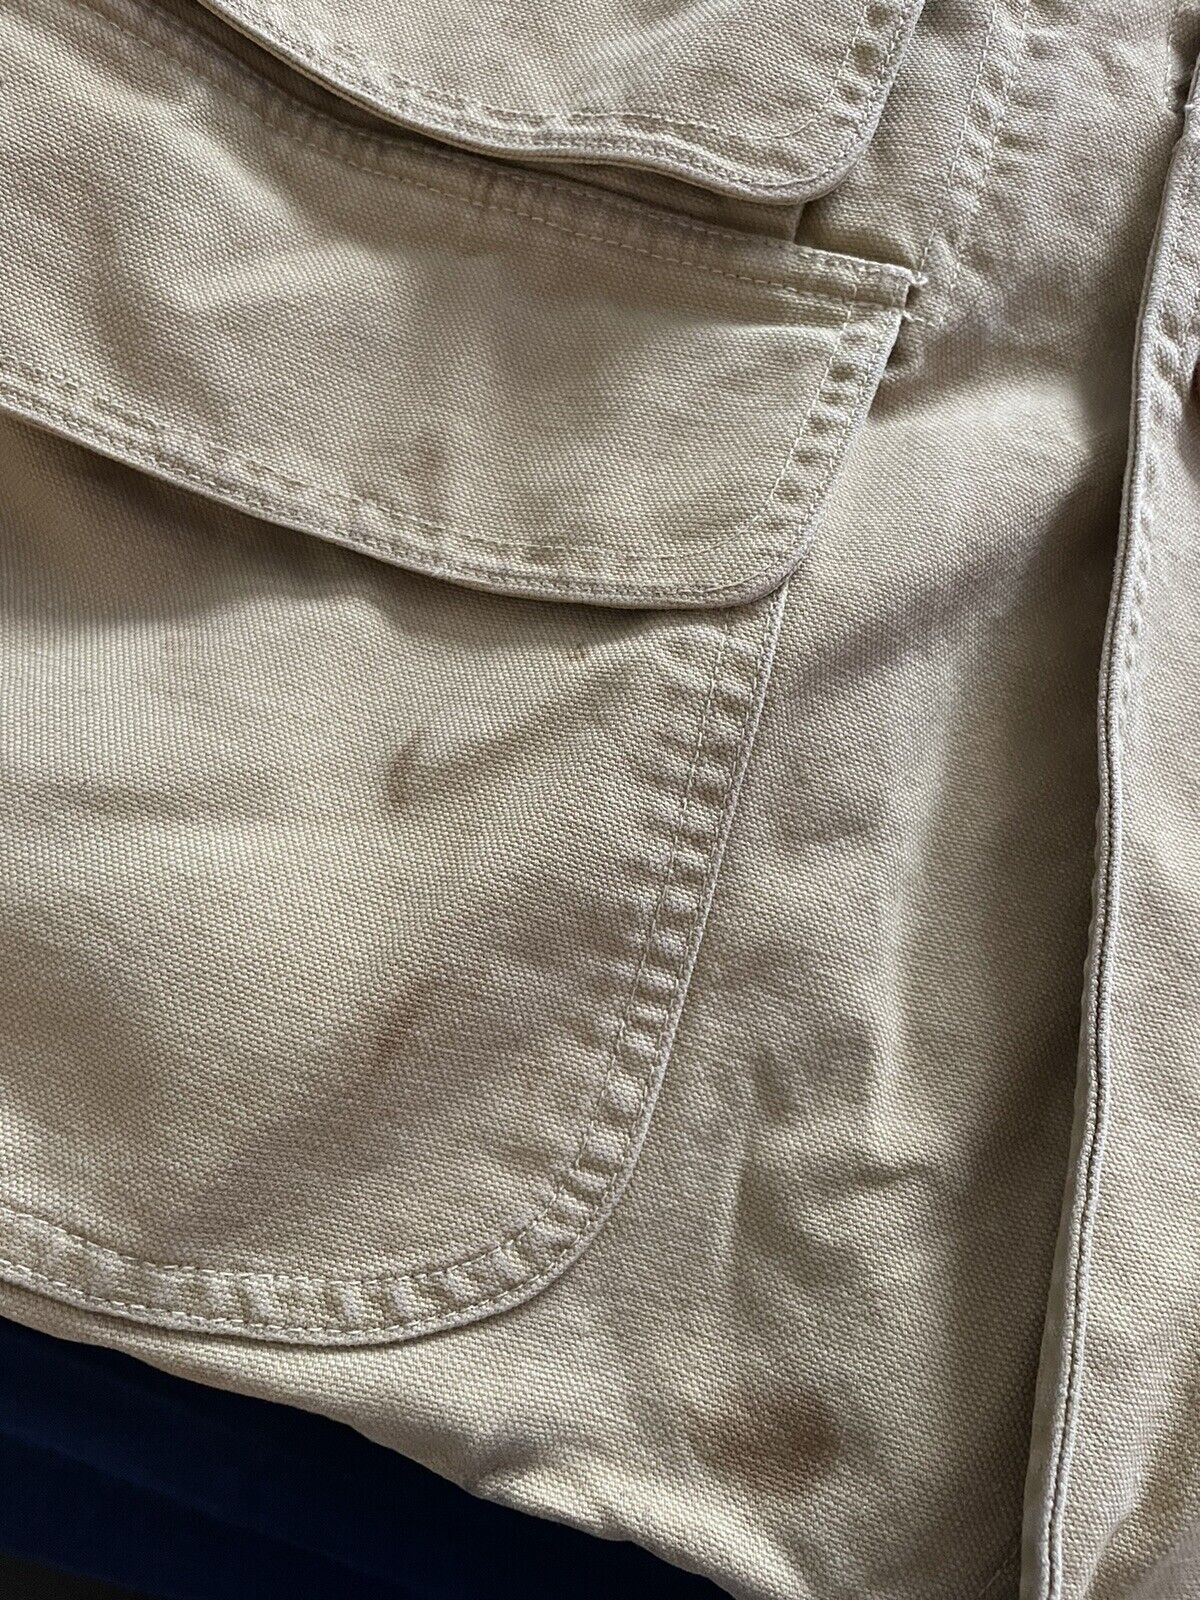 Polo Ralph Lauren Vintage Heavy Cotton Canvas Hunting Jacket Work 